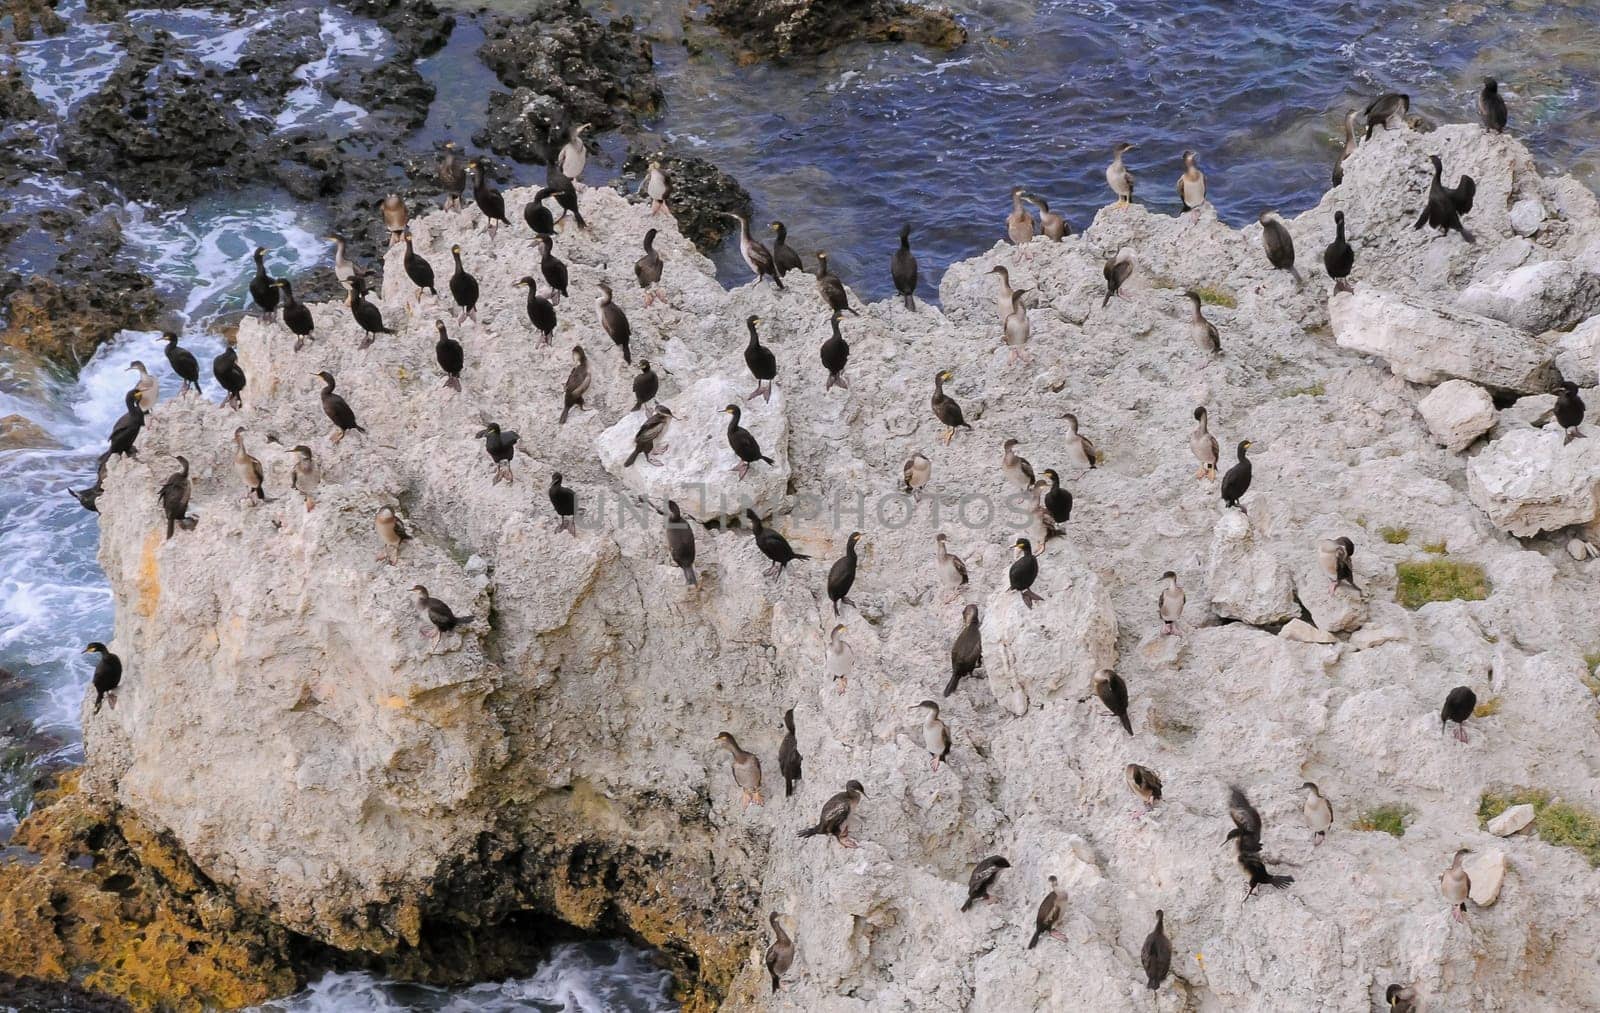 Cormorants rest on a steep bank of Pontic limestone in eastern Crimea by Hydrobiolog